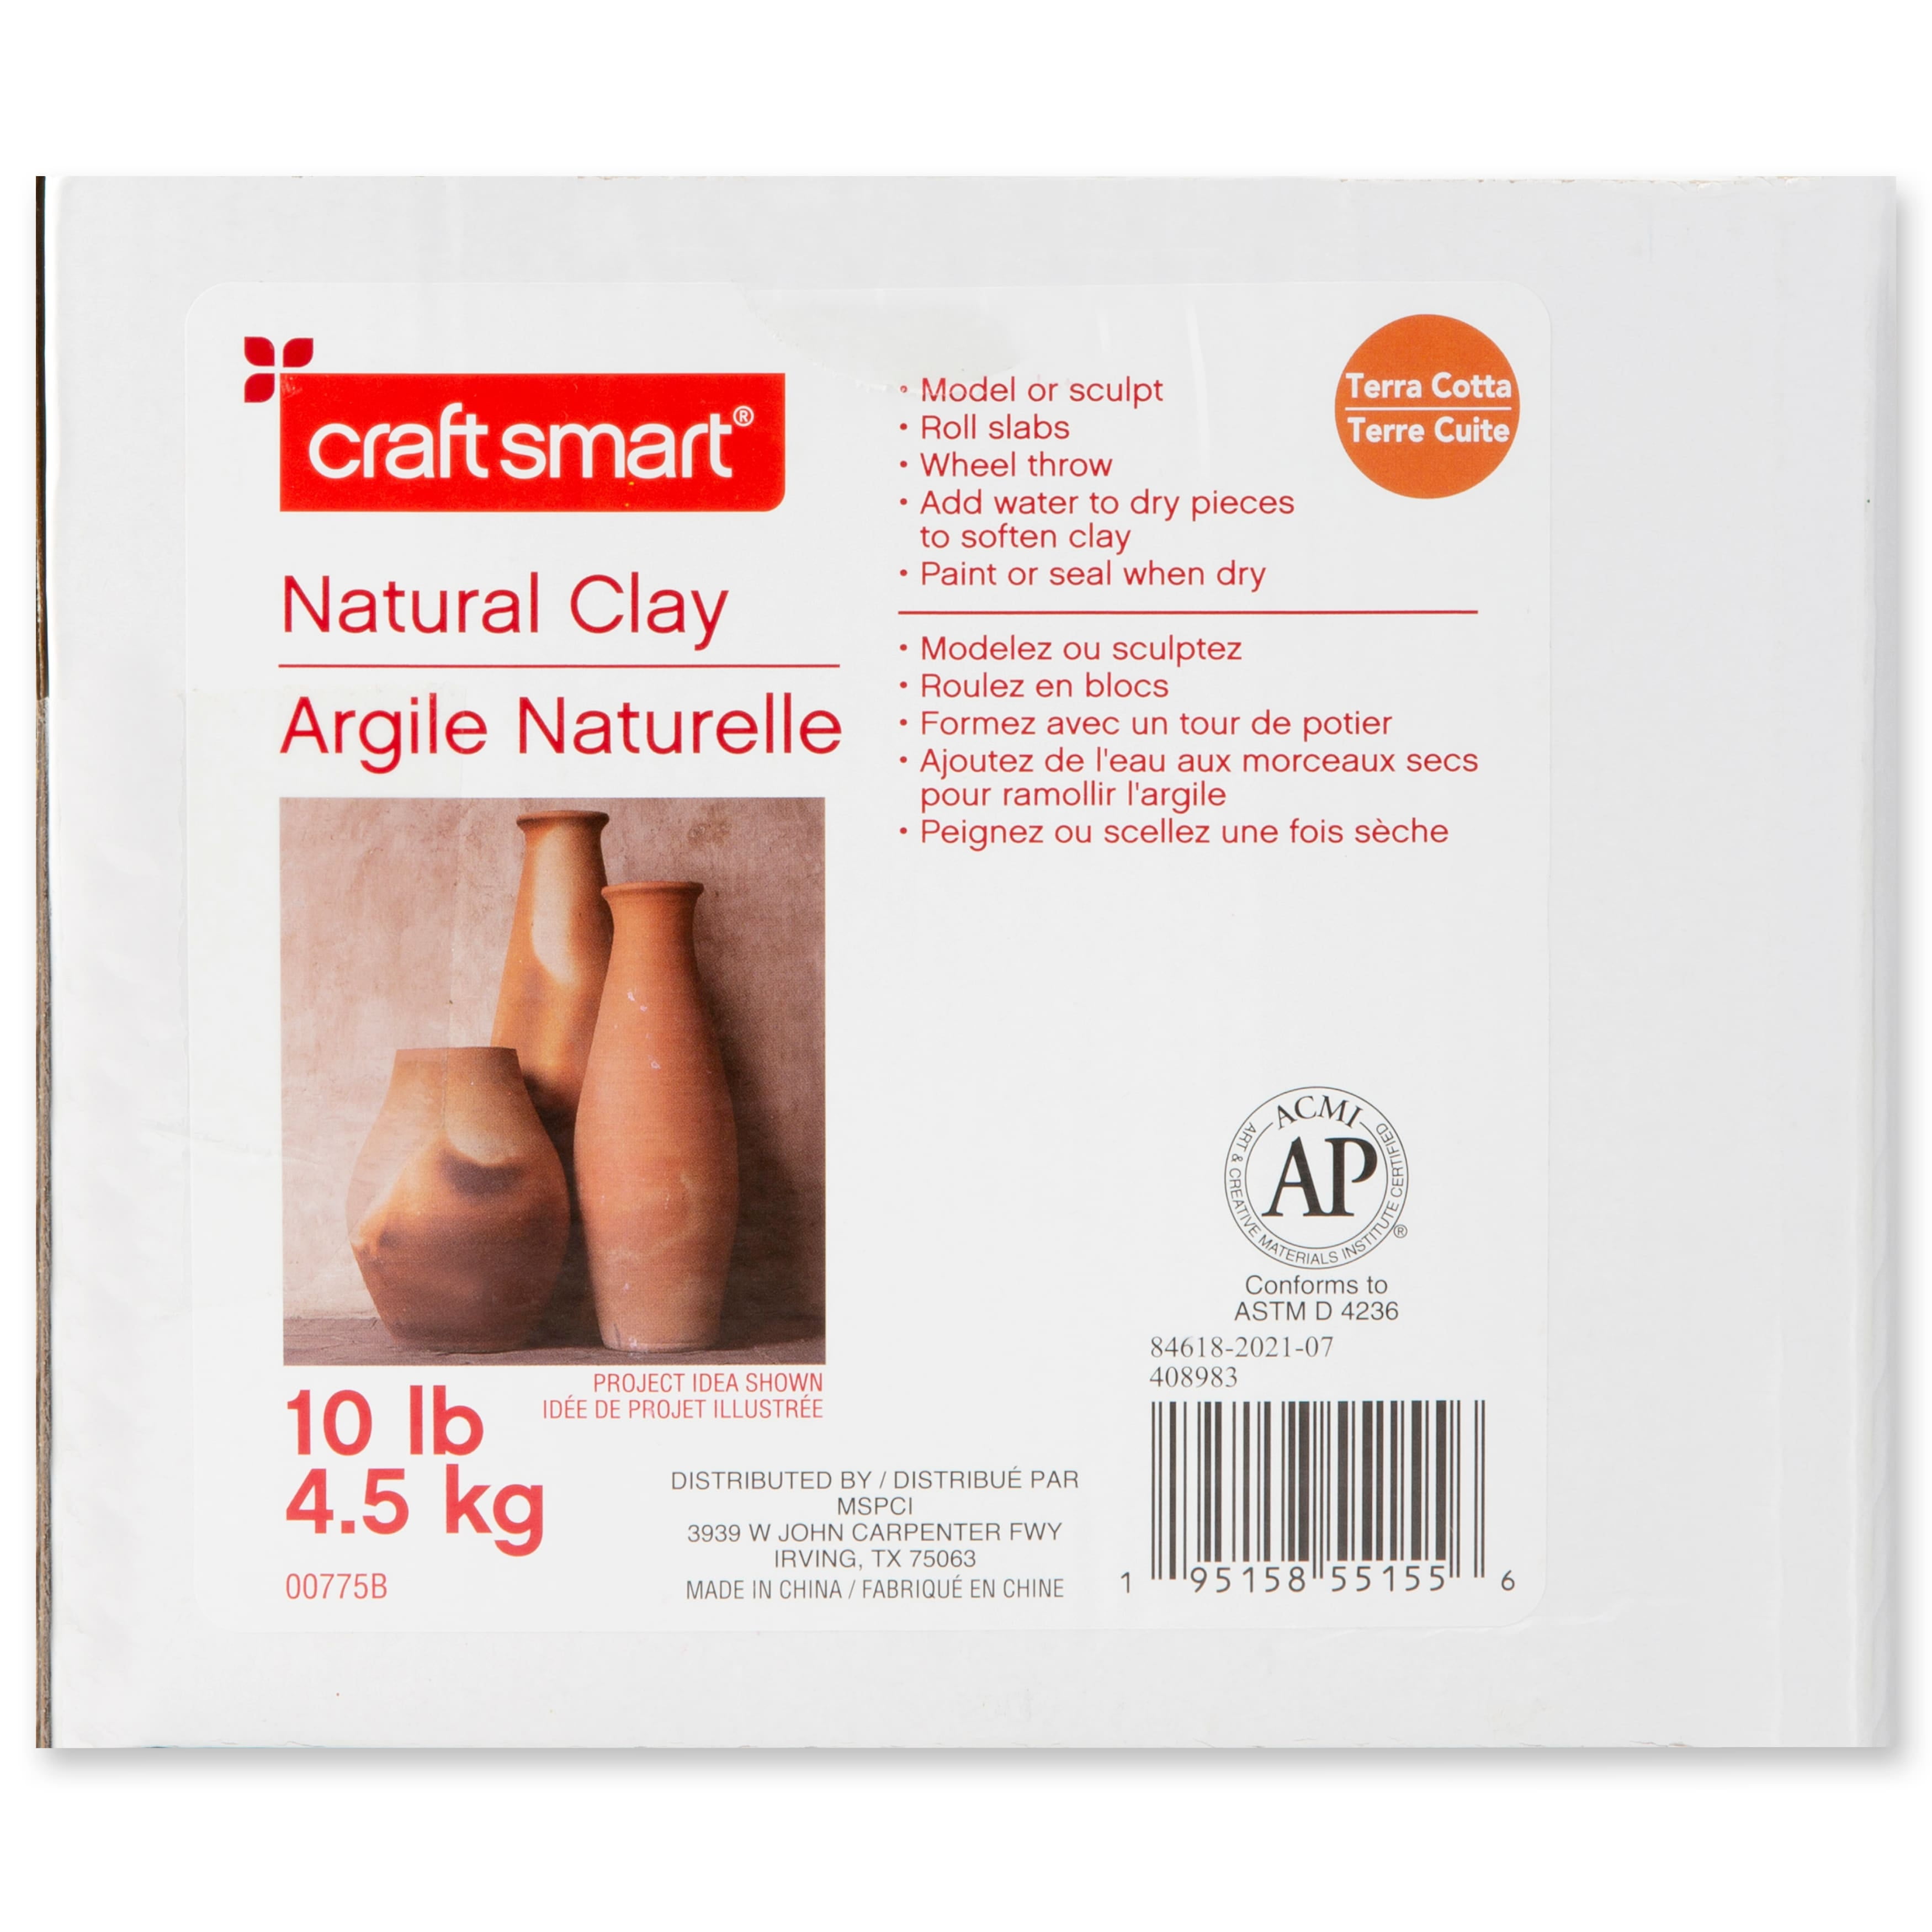 RÖMERTOPF® - Natural Clay - Ideas for natural cooking